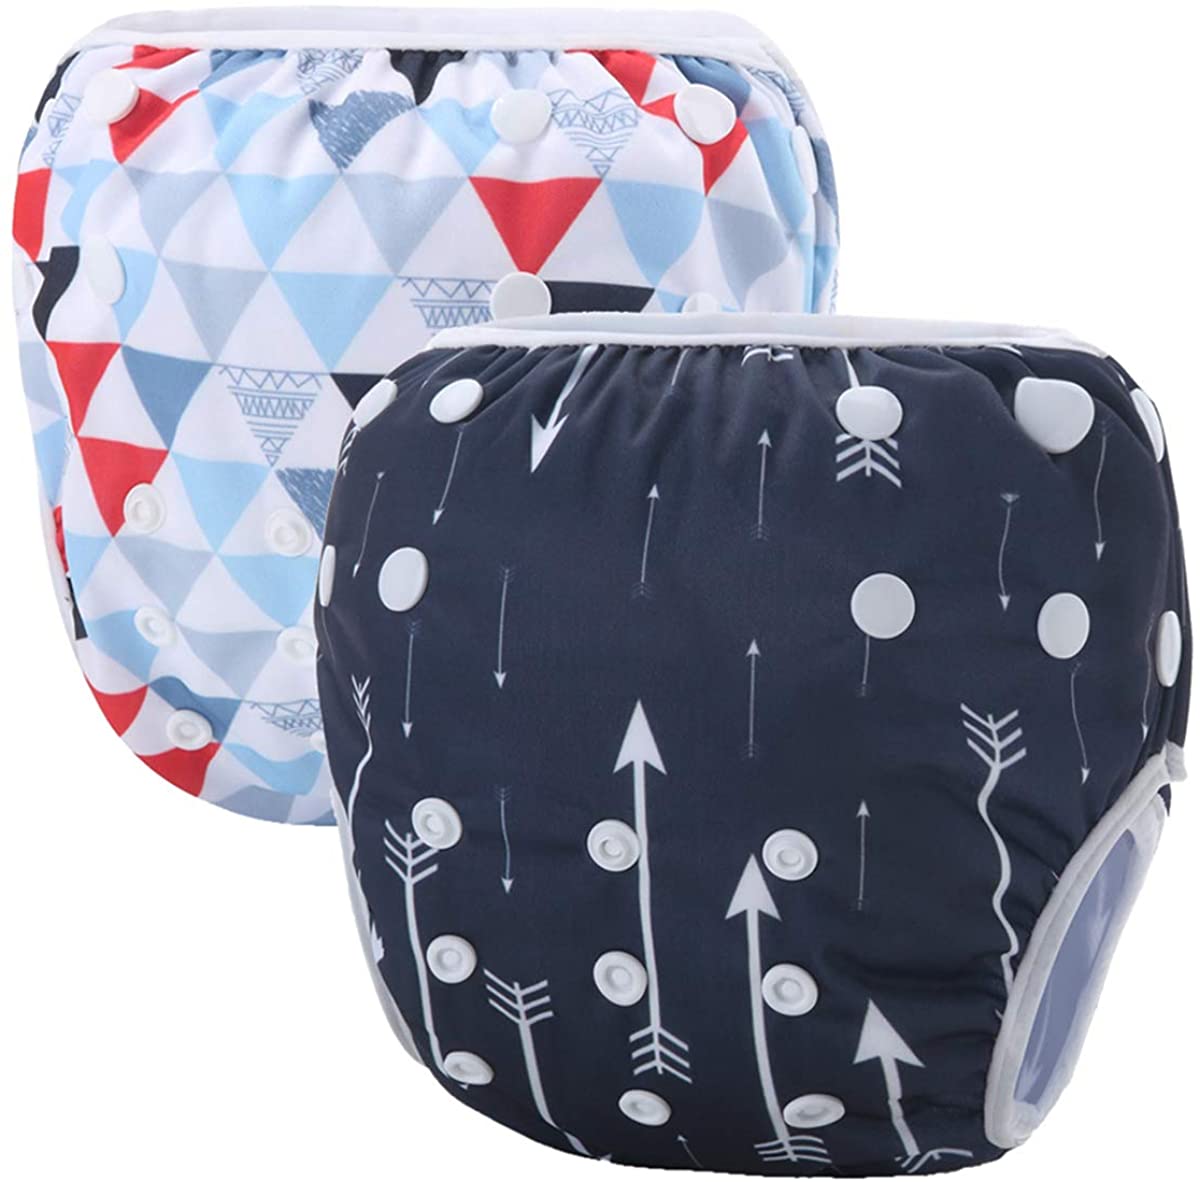 storeofbaby Reusable Swim Diapers Covers Waterproof, Navy Arrow, Size ...